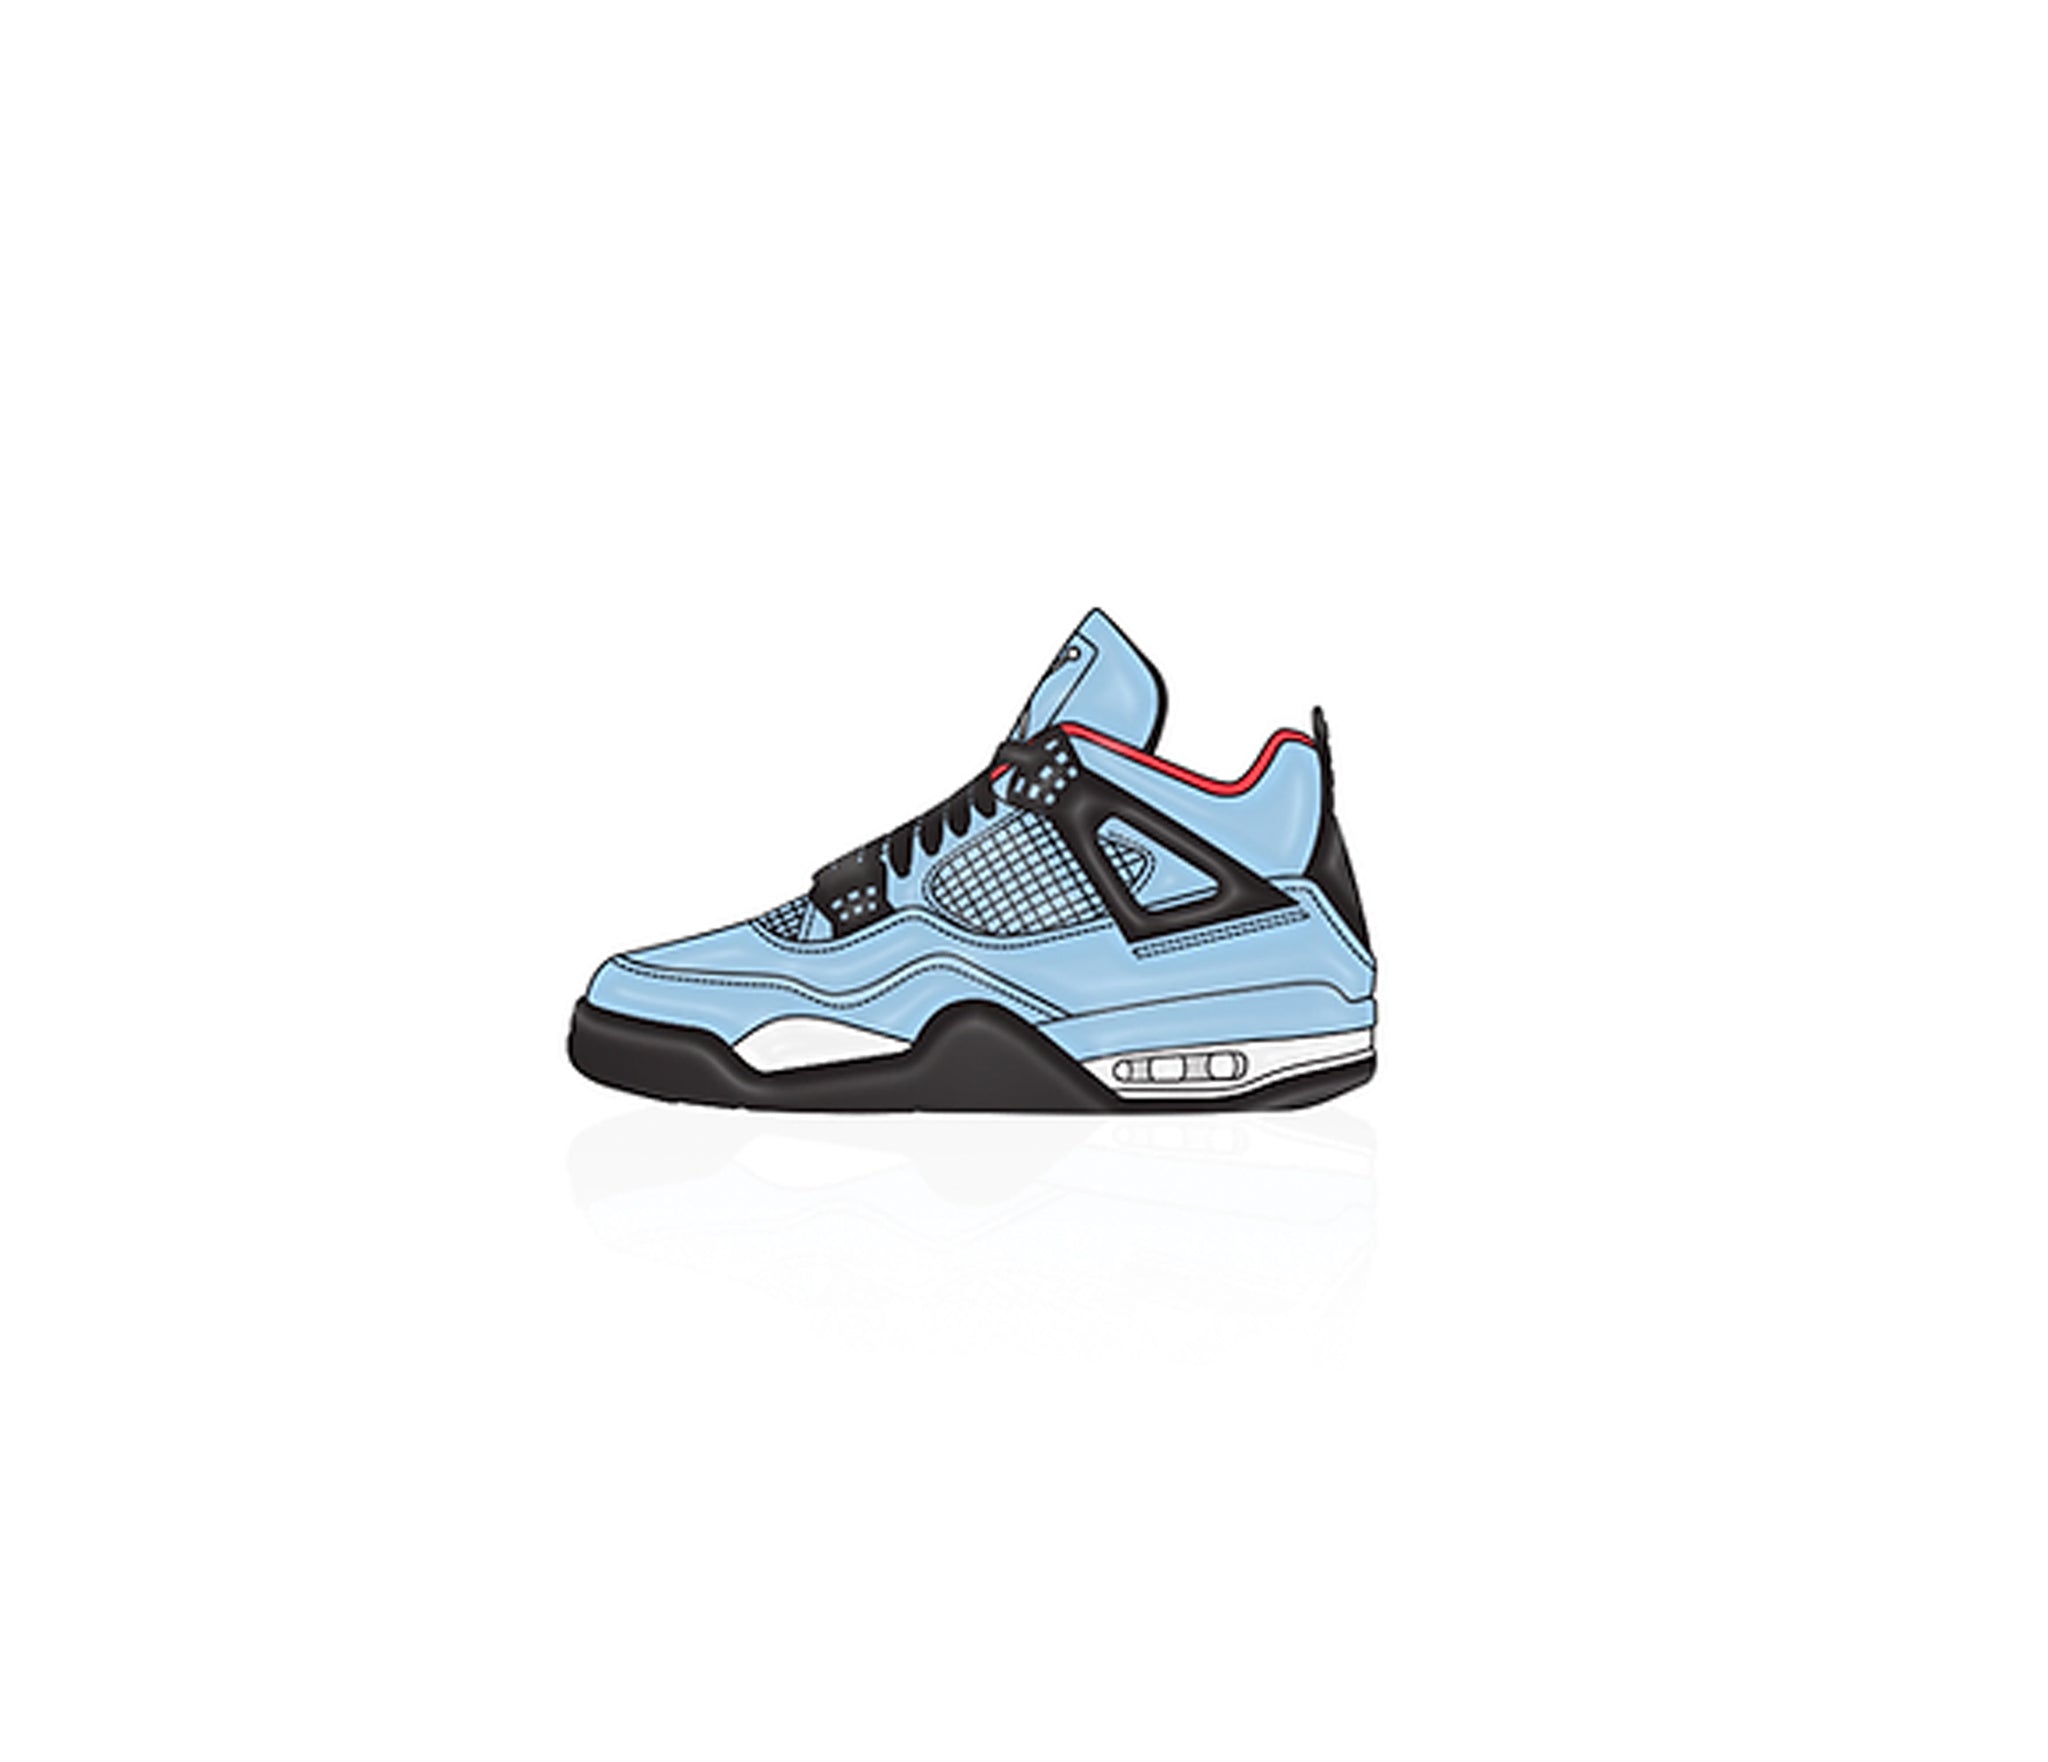 Shop Deadstock Air Jordan 4 Sneakers & More | Authenticity Guaranteed